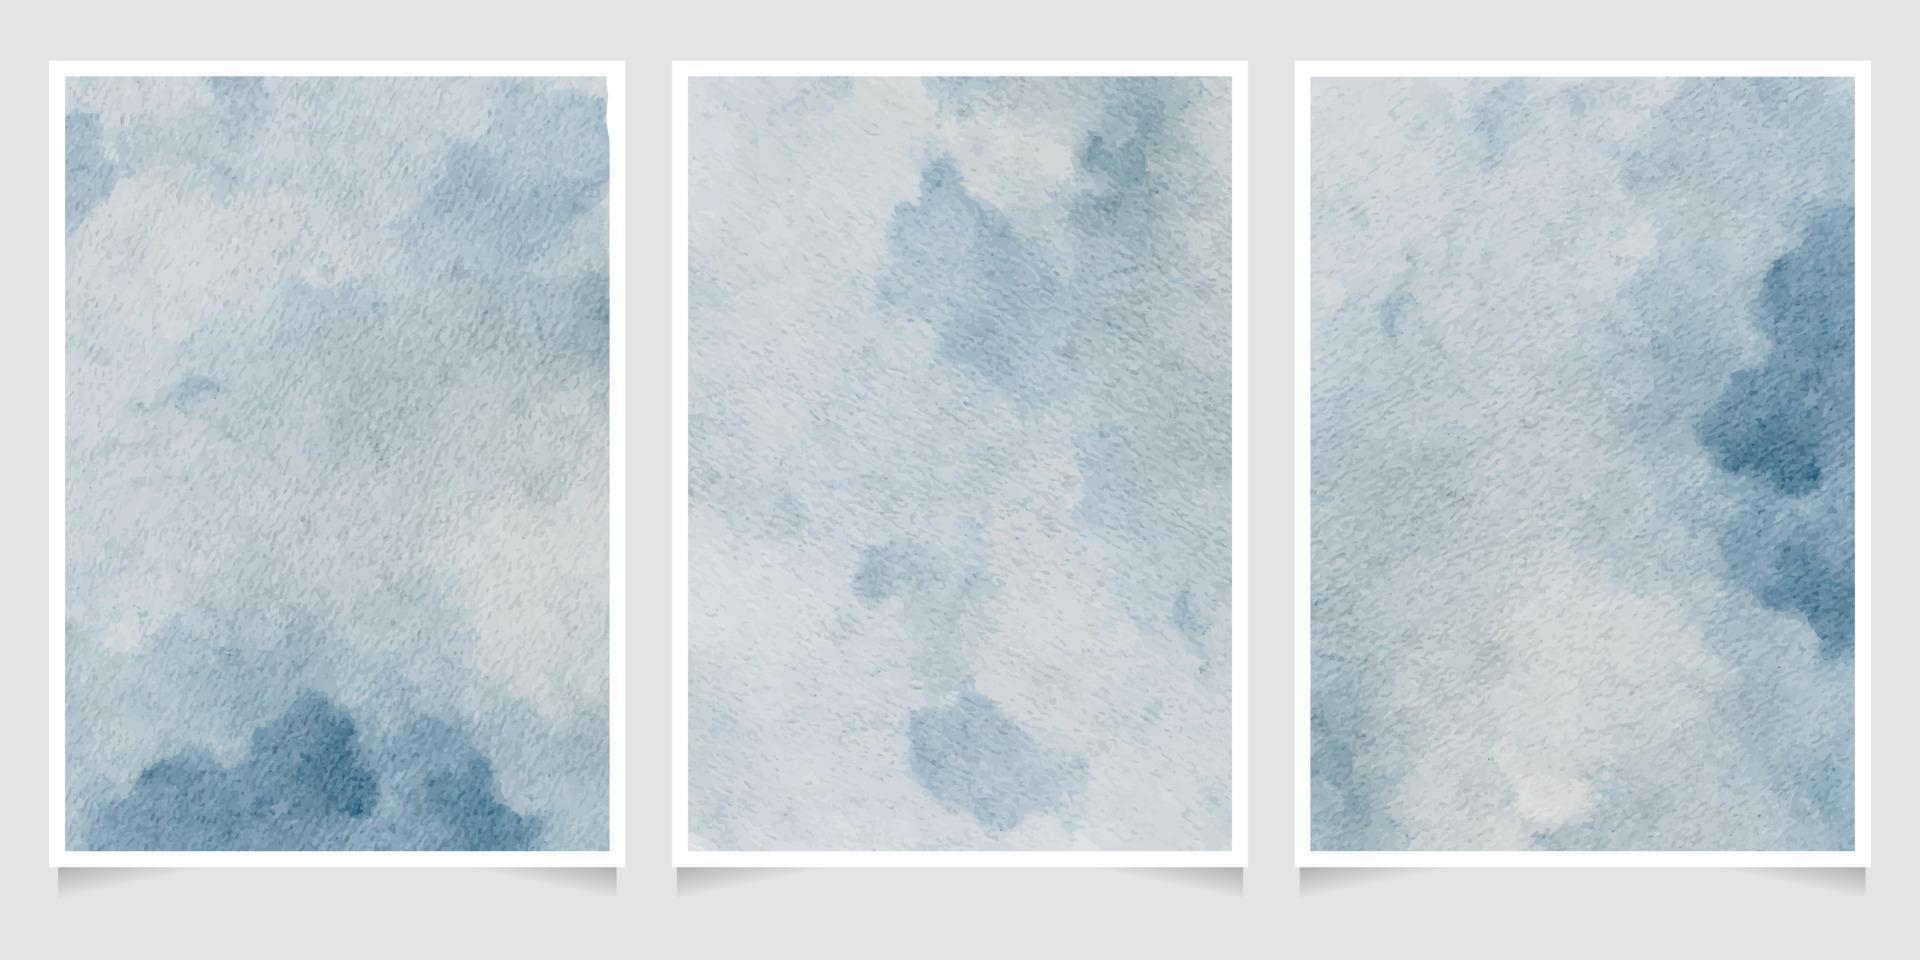 indigo navy blue watercolor wet wash splash 5x7 invitation card background template collection vector